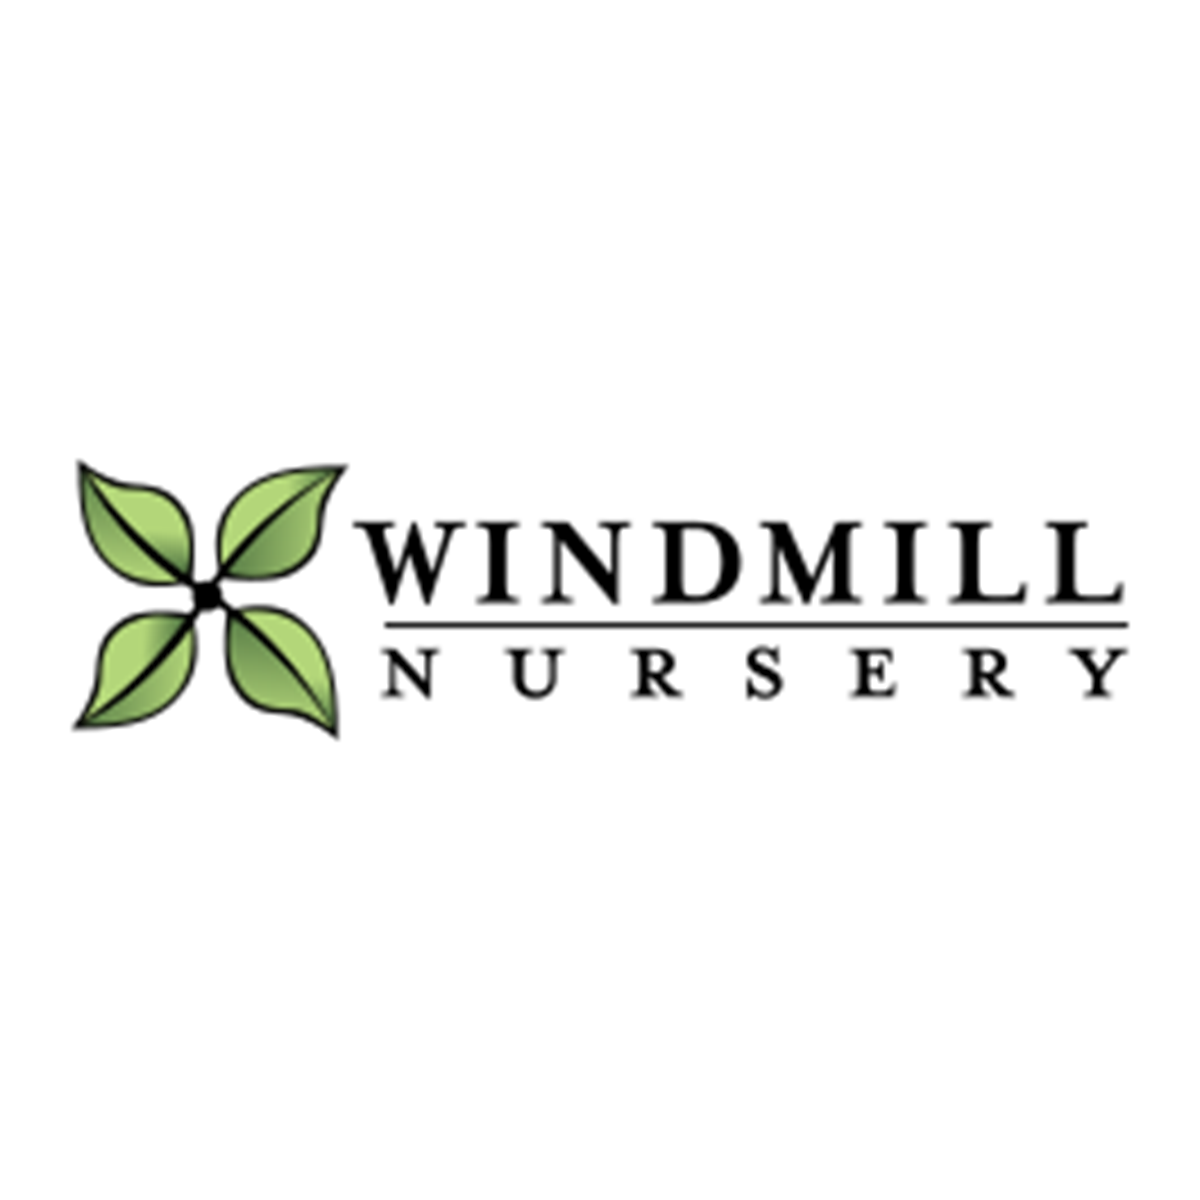 Windmill Nursery Logo.PNG